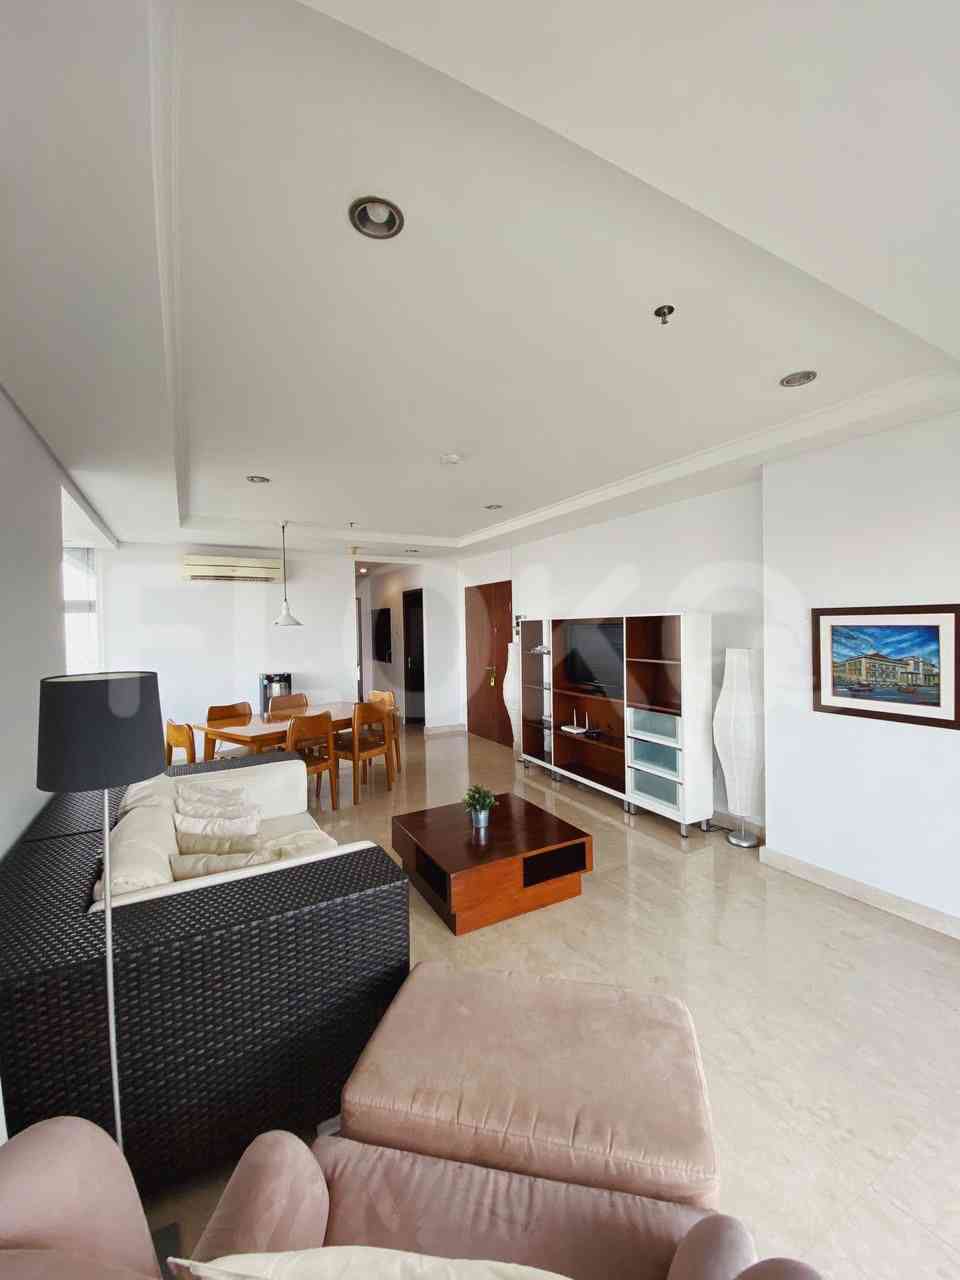 4 Bedroom on 26th Floor for Rent in Permata Hijau Suites Apartment - fpeb05 5